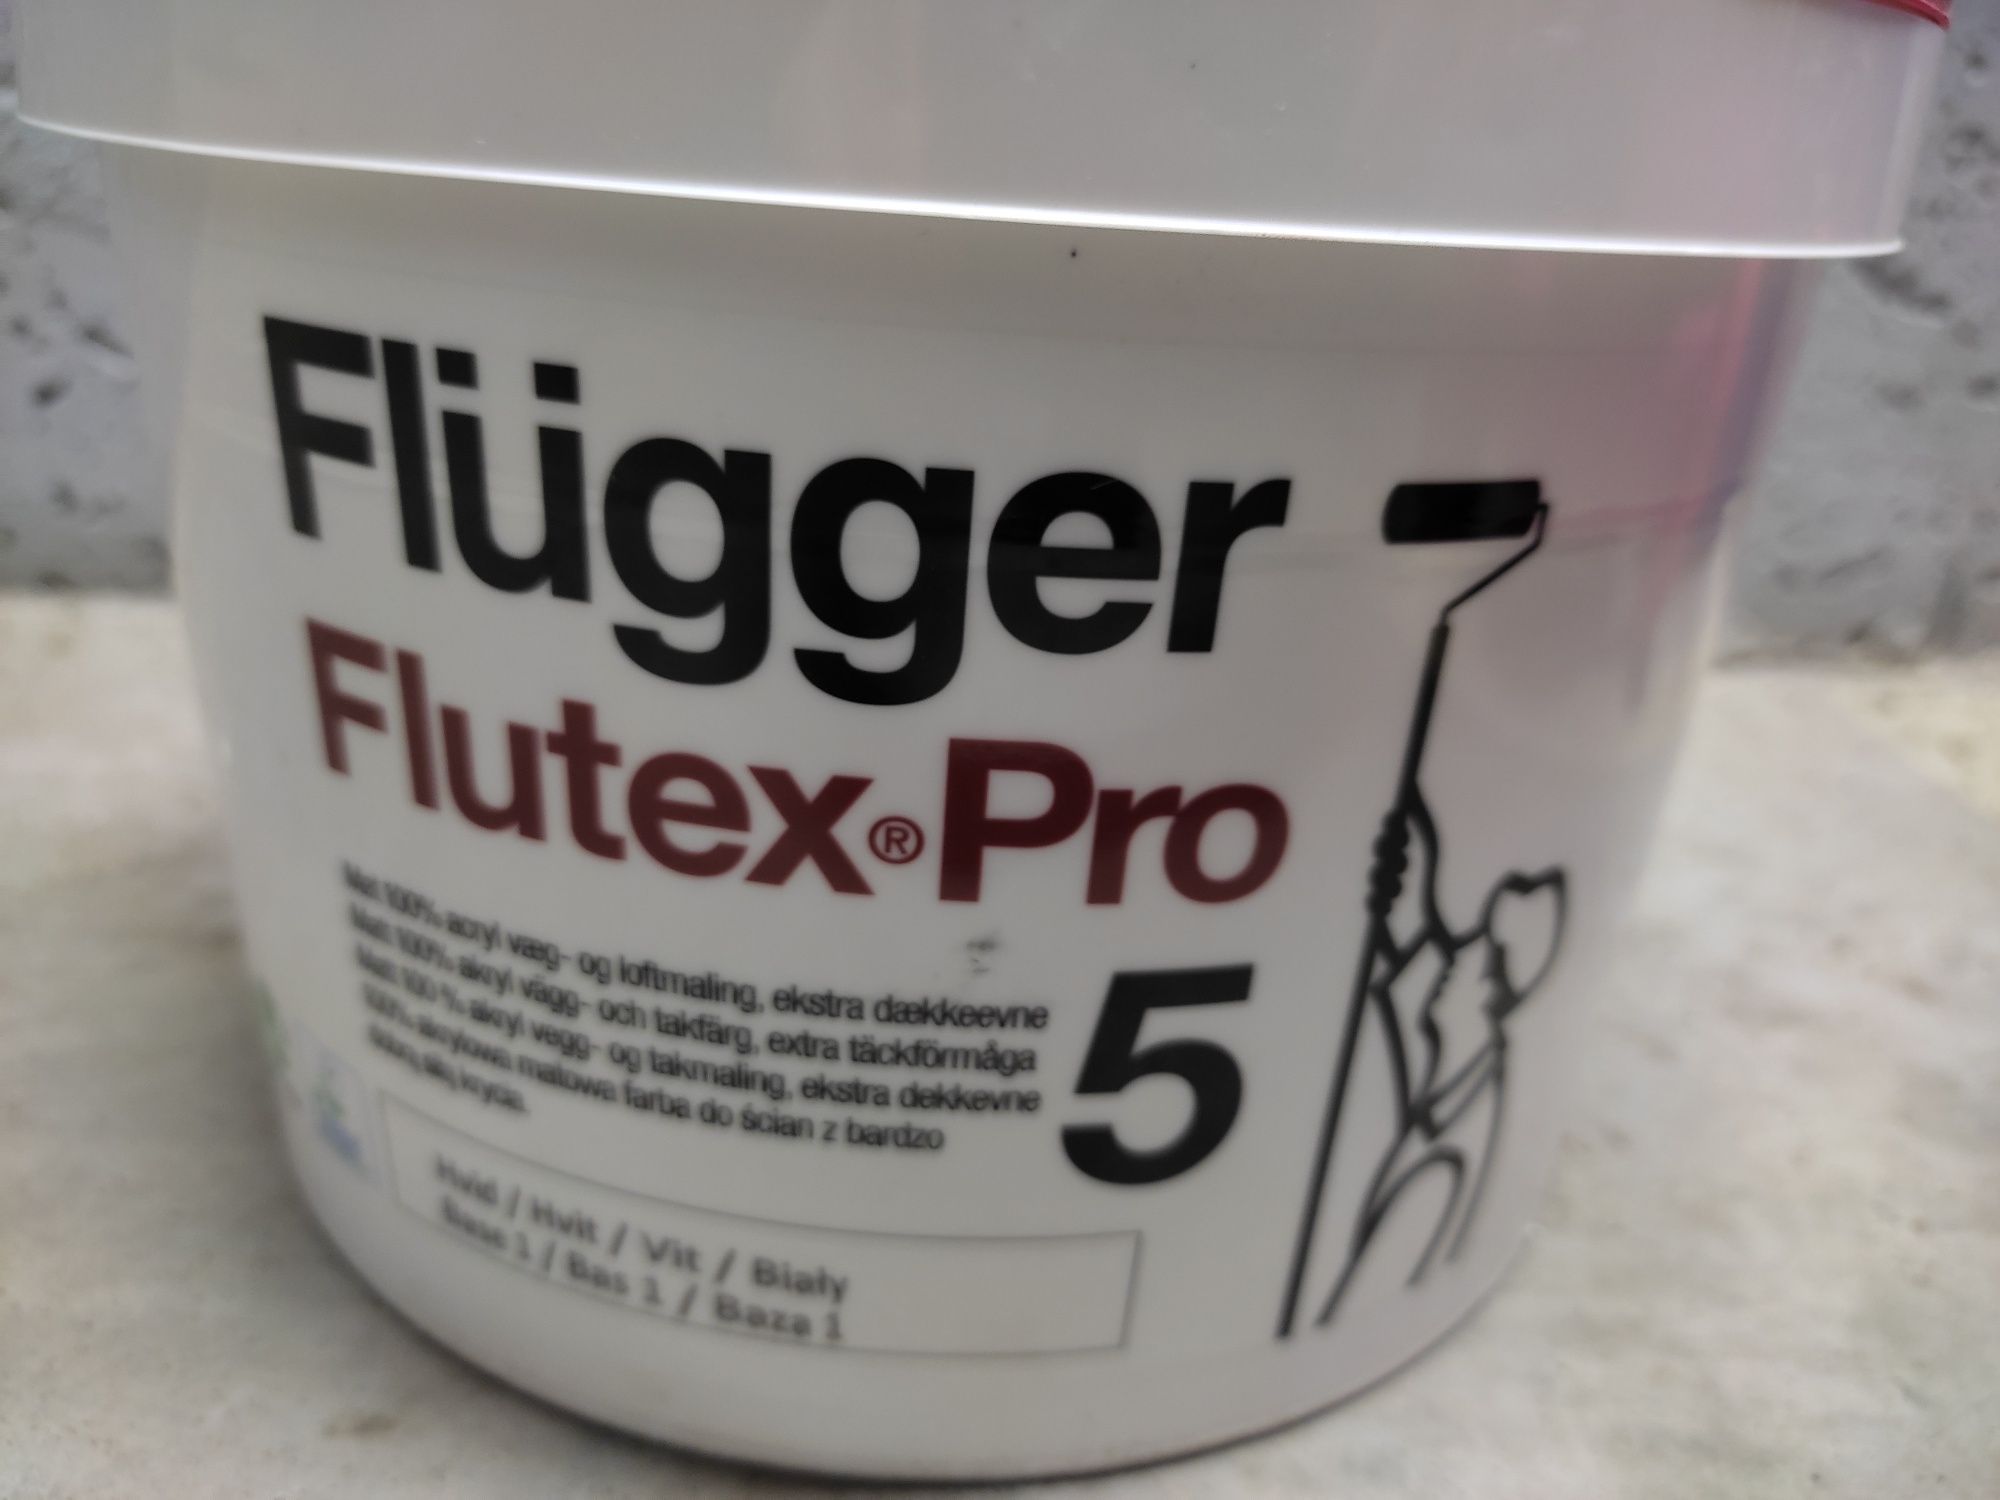 Farba Flugger Flutex-pro 5 2.8l